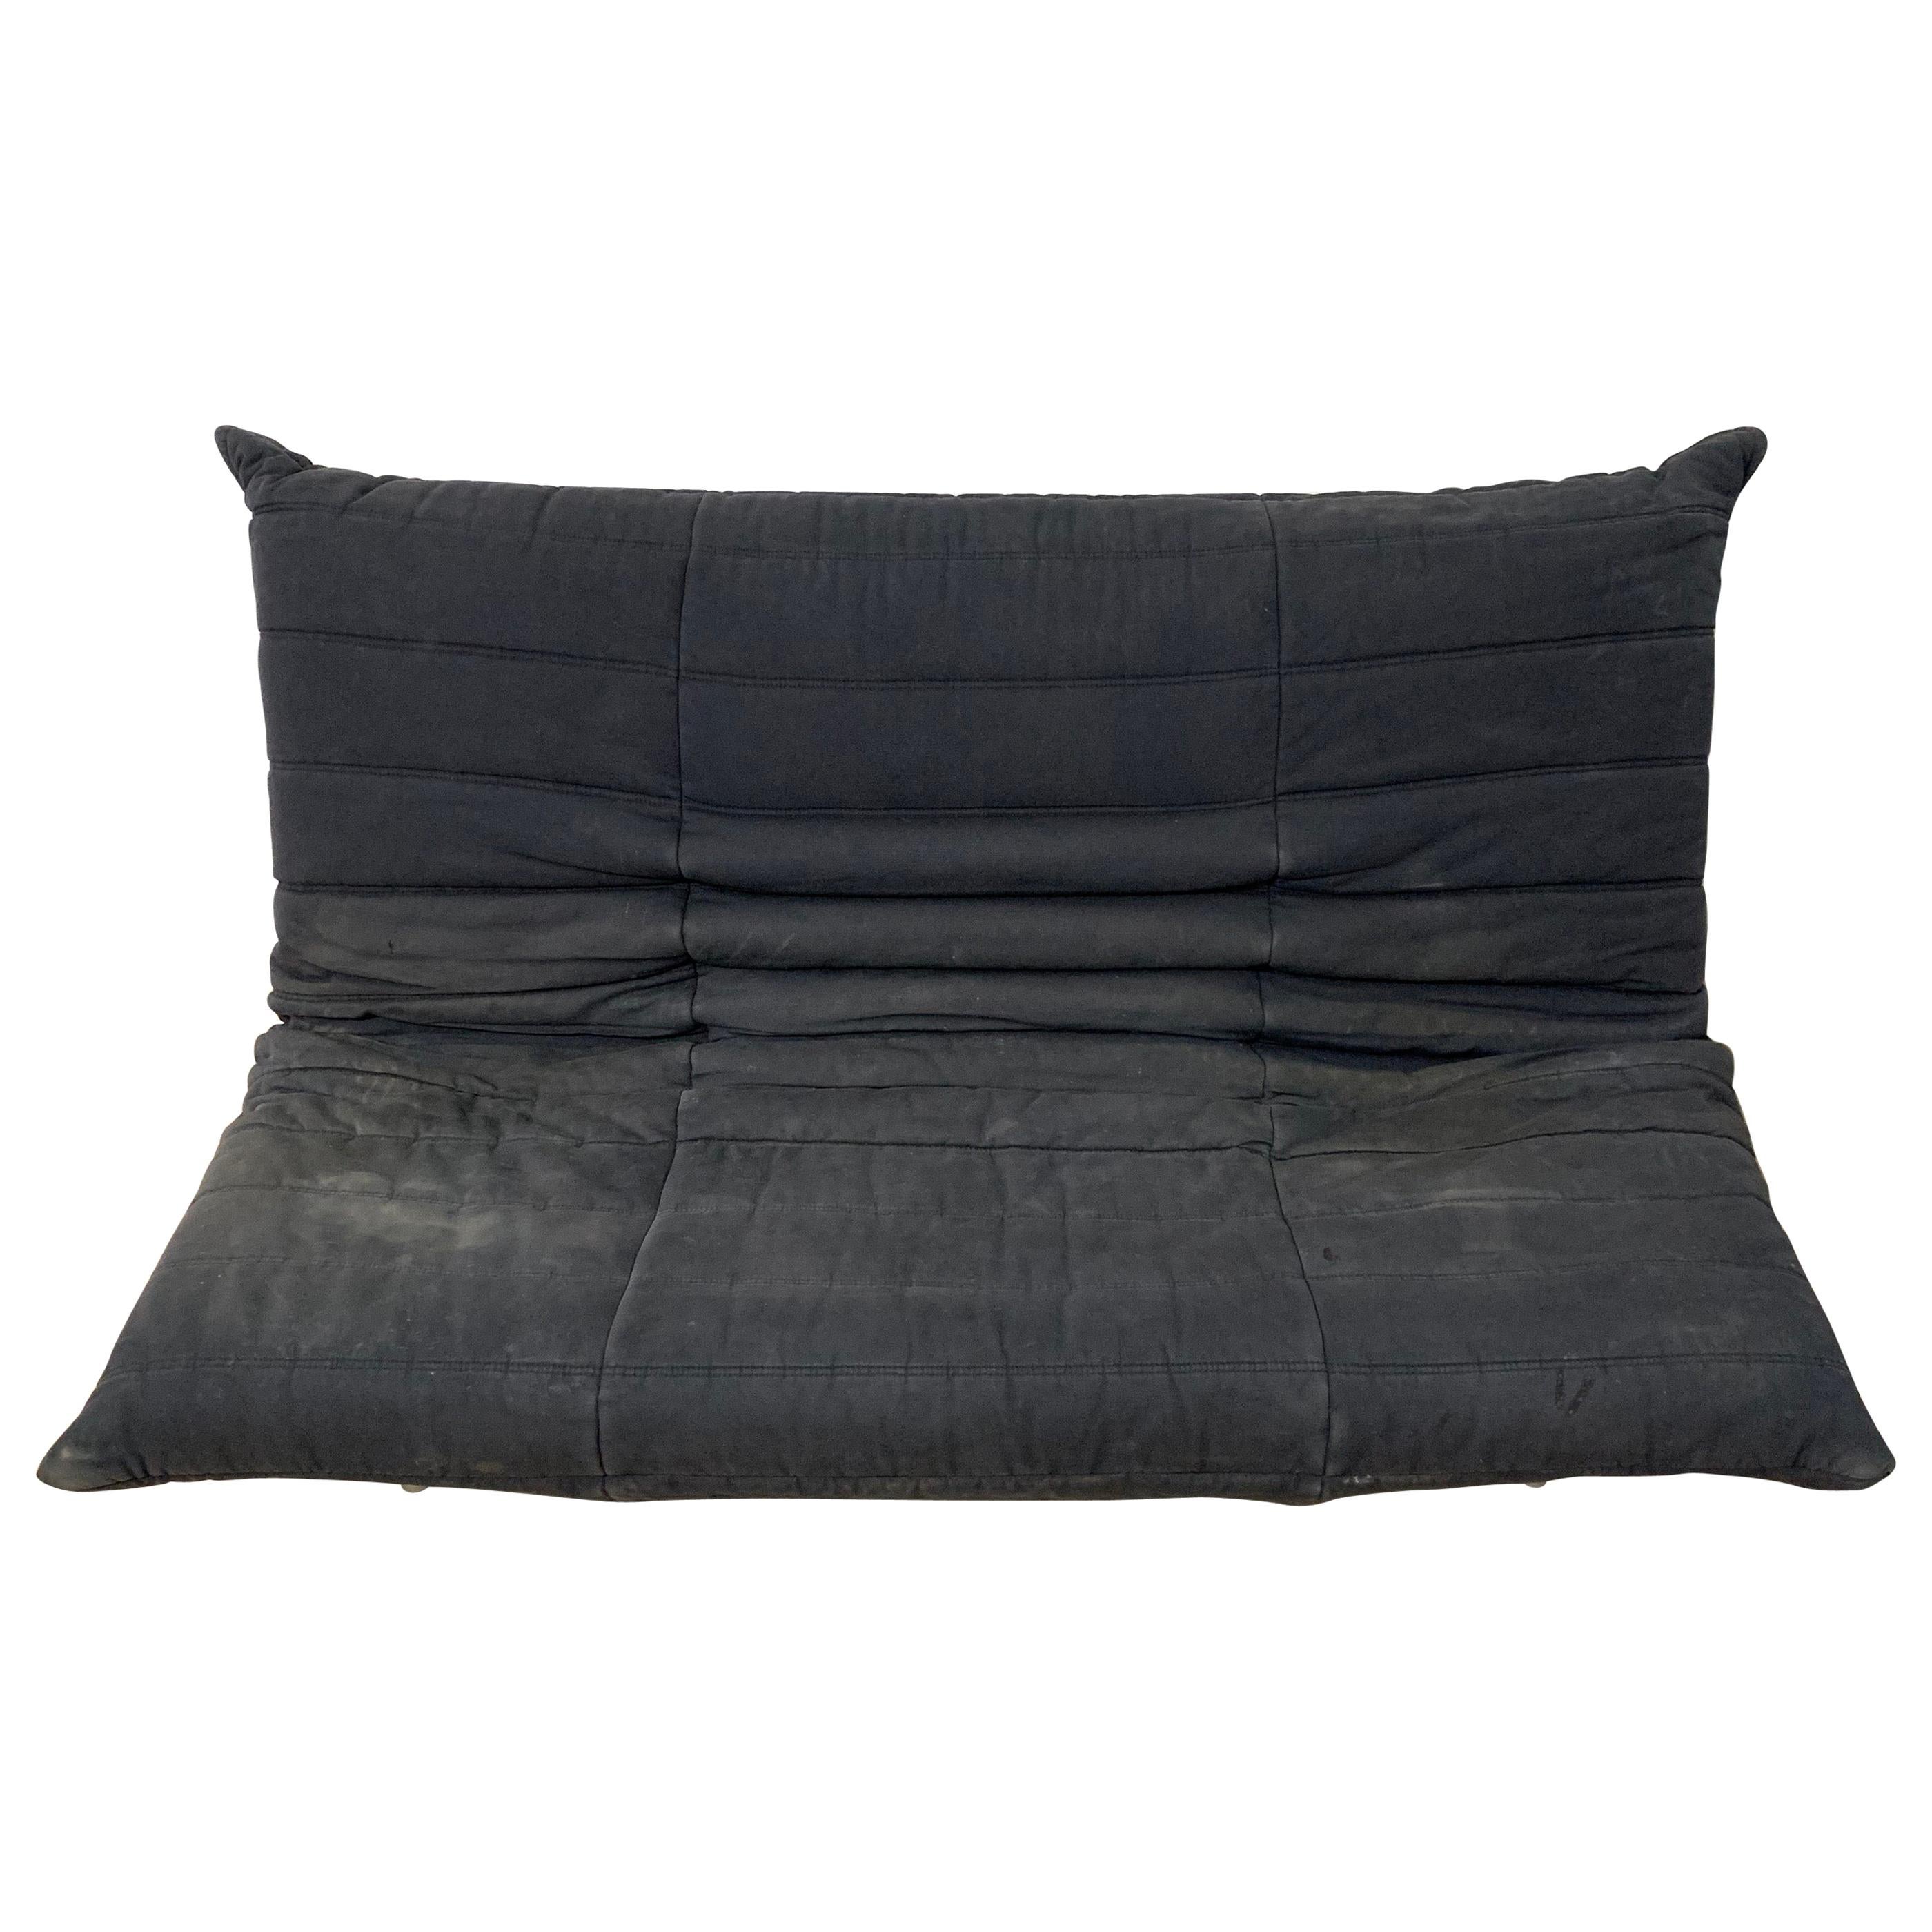 Rare Togo Sleeper Sofa or Futon by Michael Ducaroy for Ligne Roset